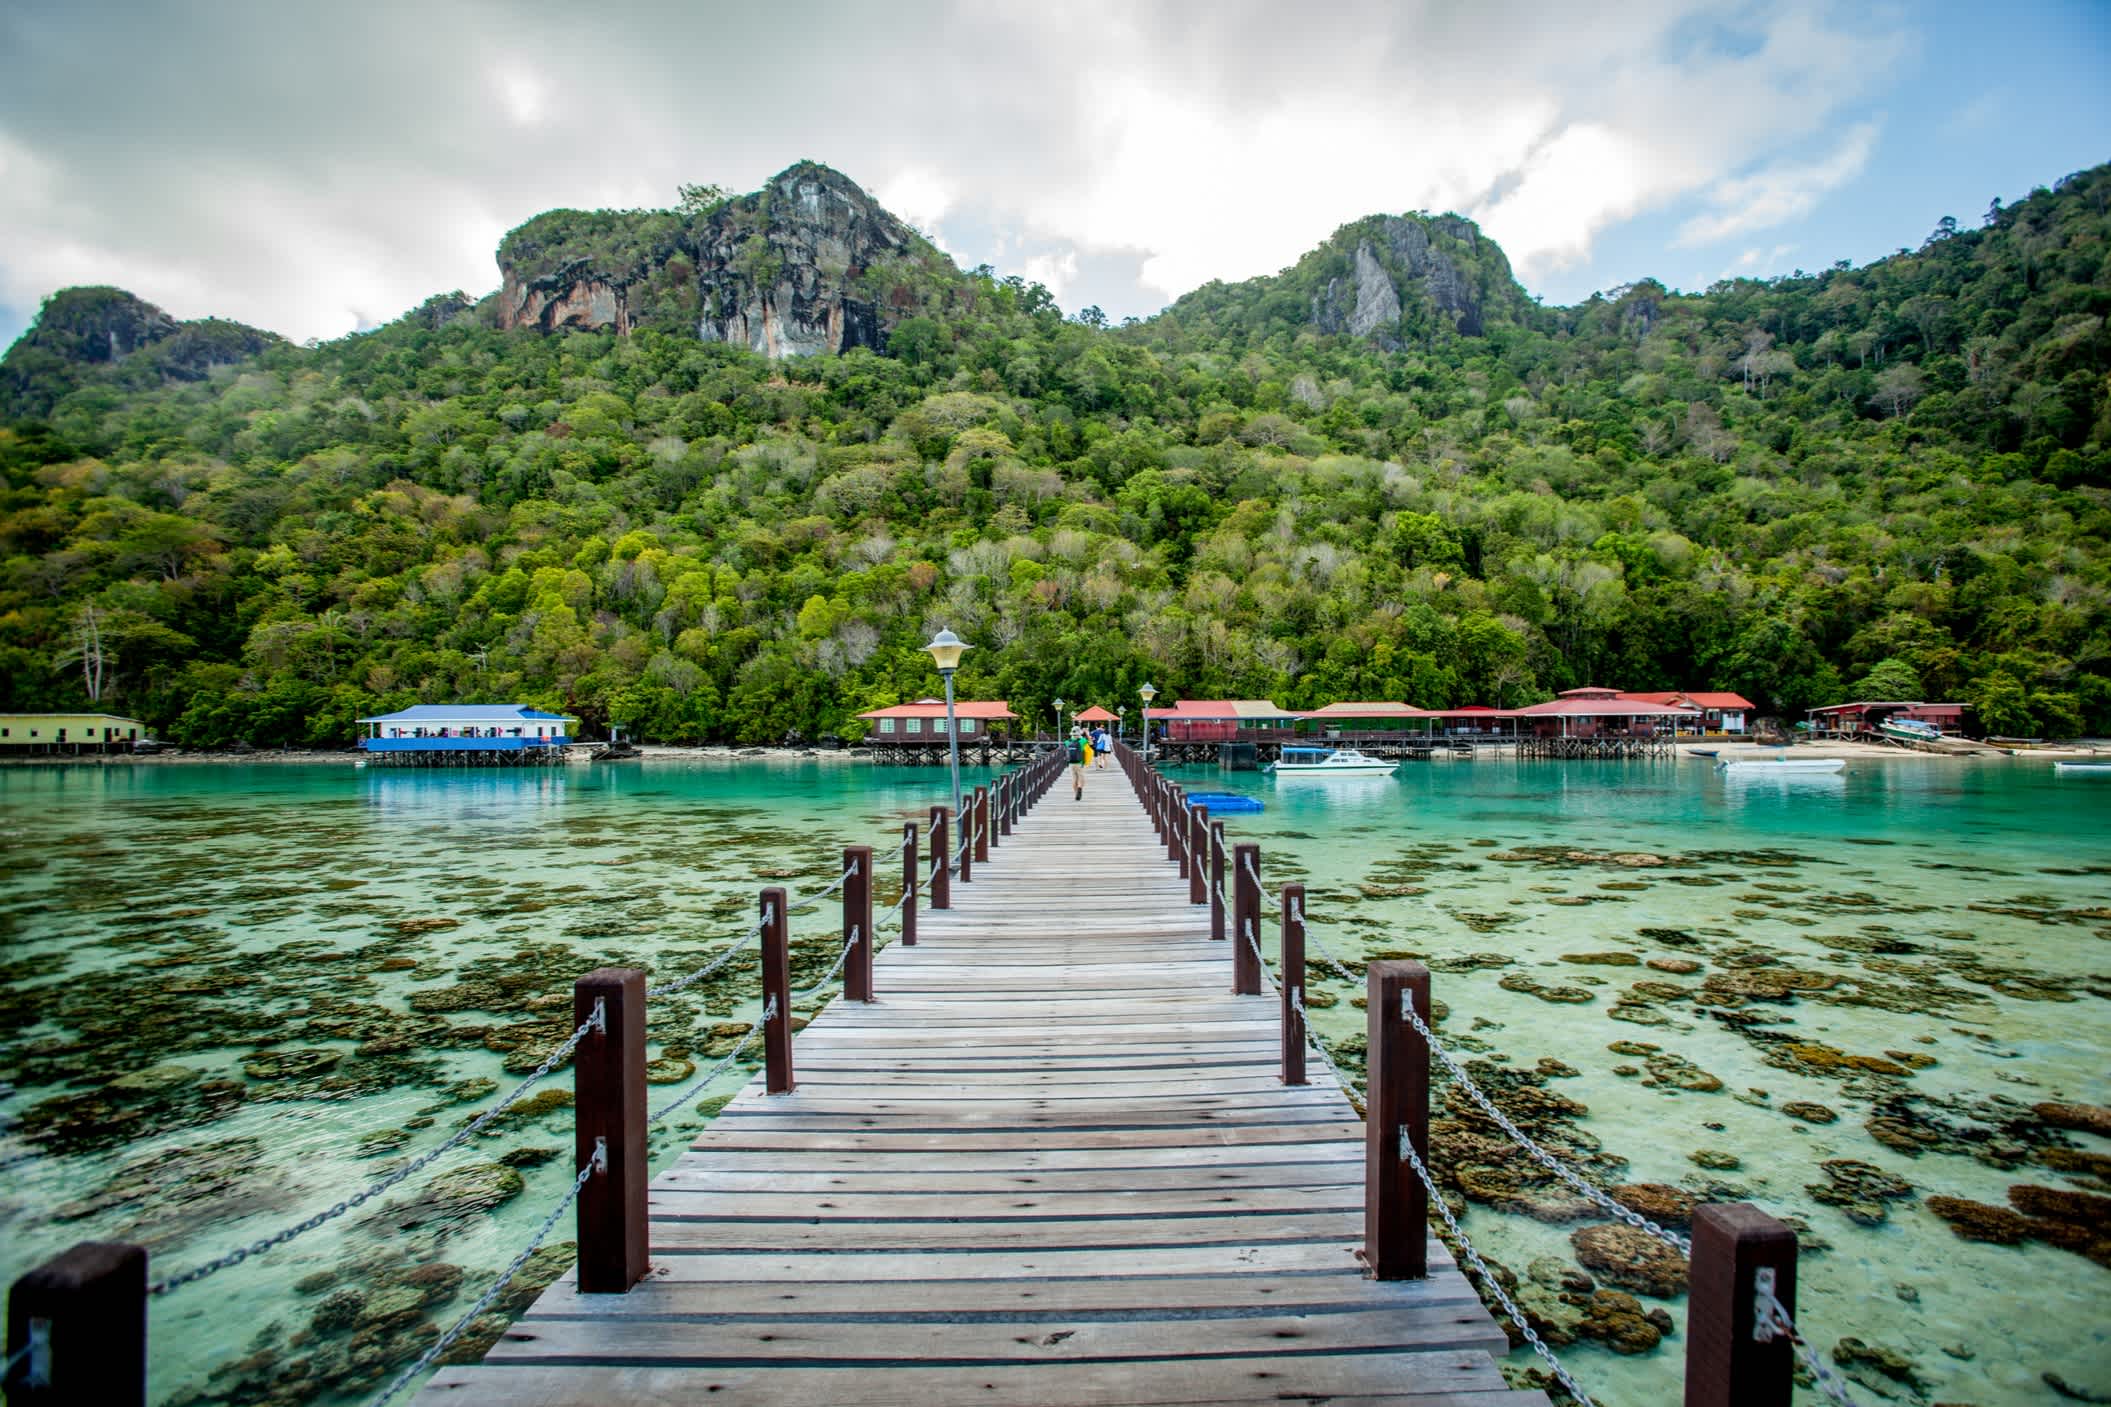 Holzbrücke über türkisblauem Wasser in Borneo.